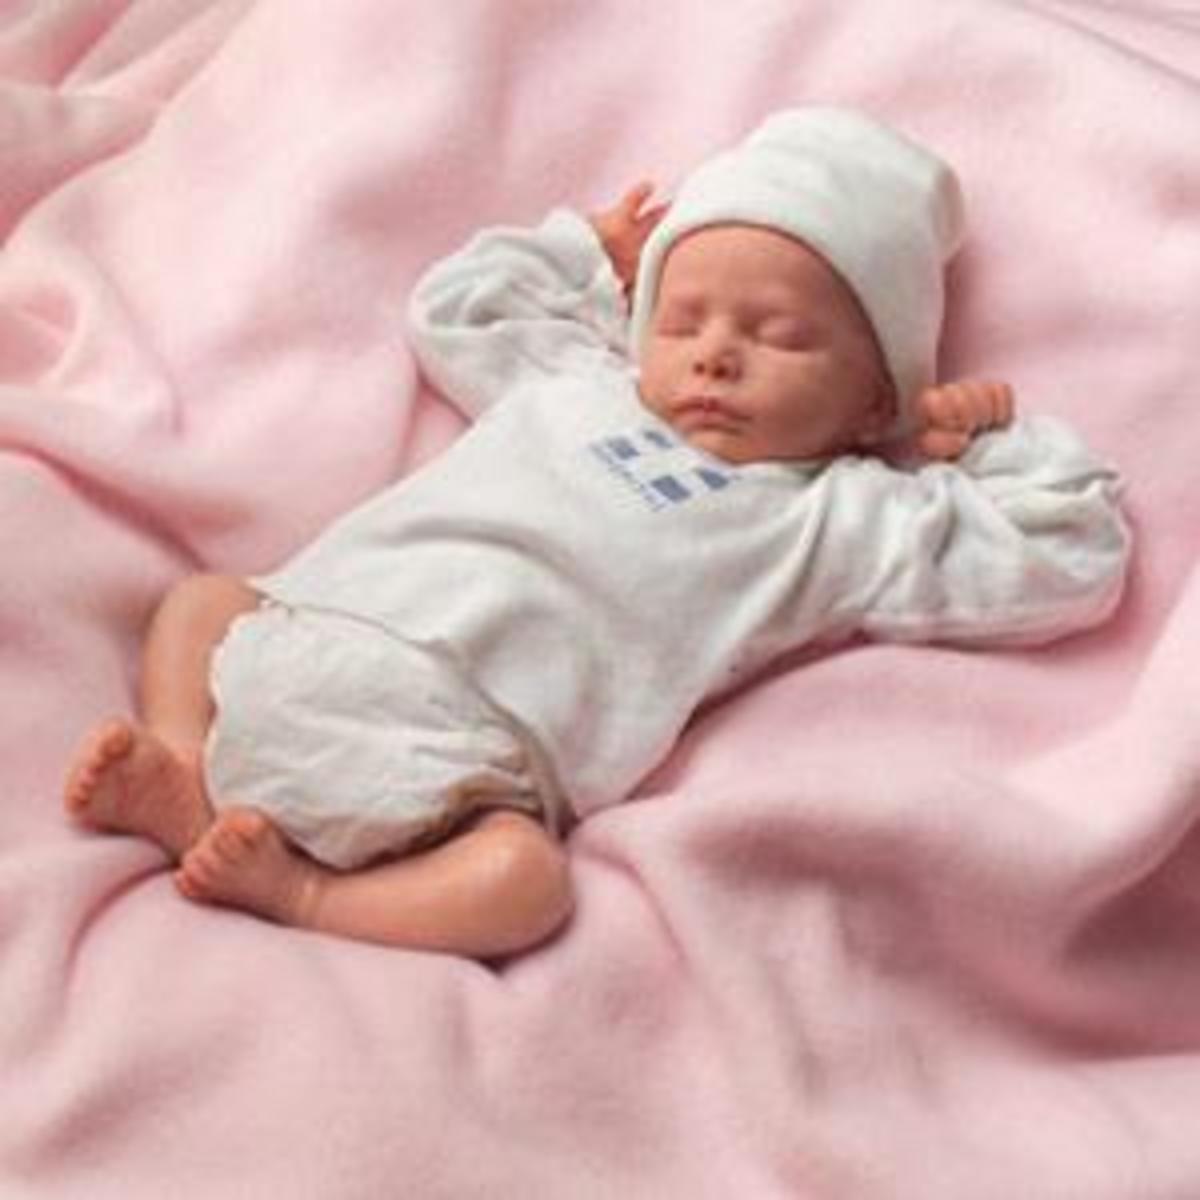 reborn dolls that look real on Pinterest | Reborn Babies ...